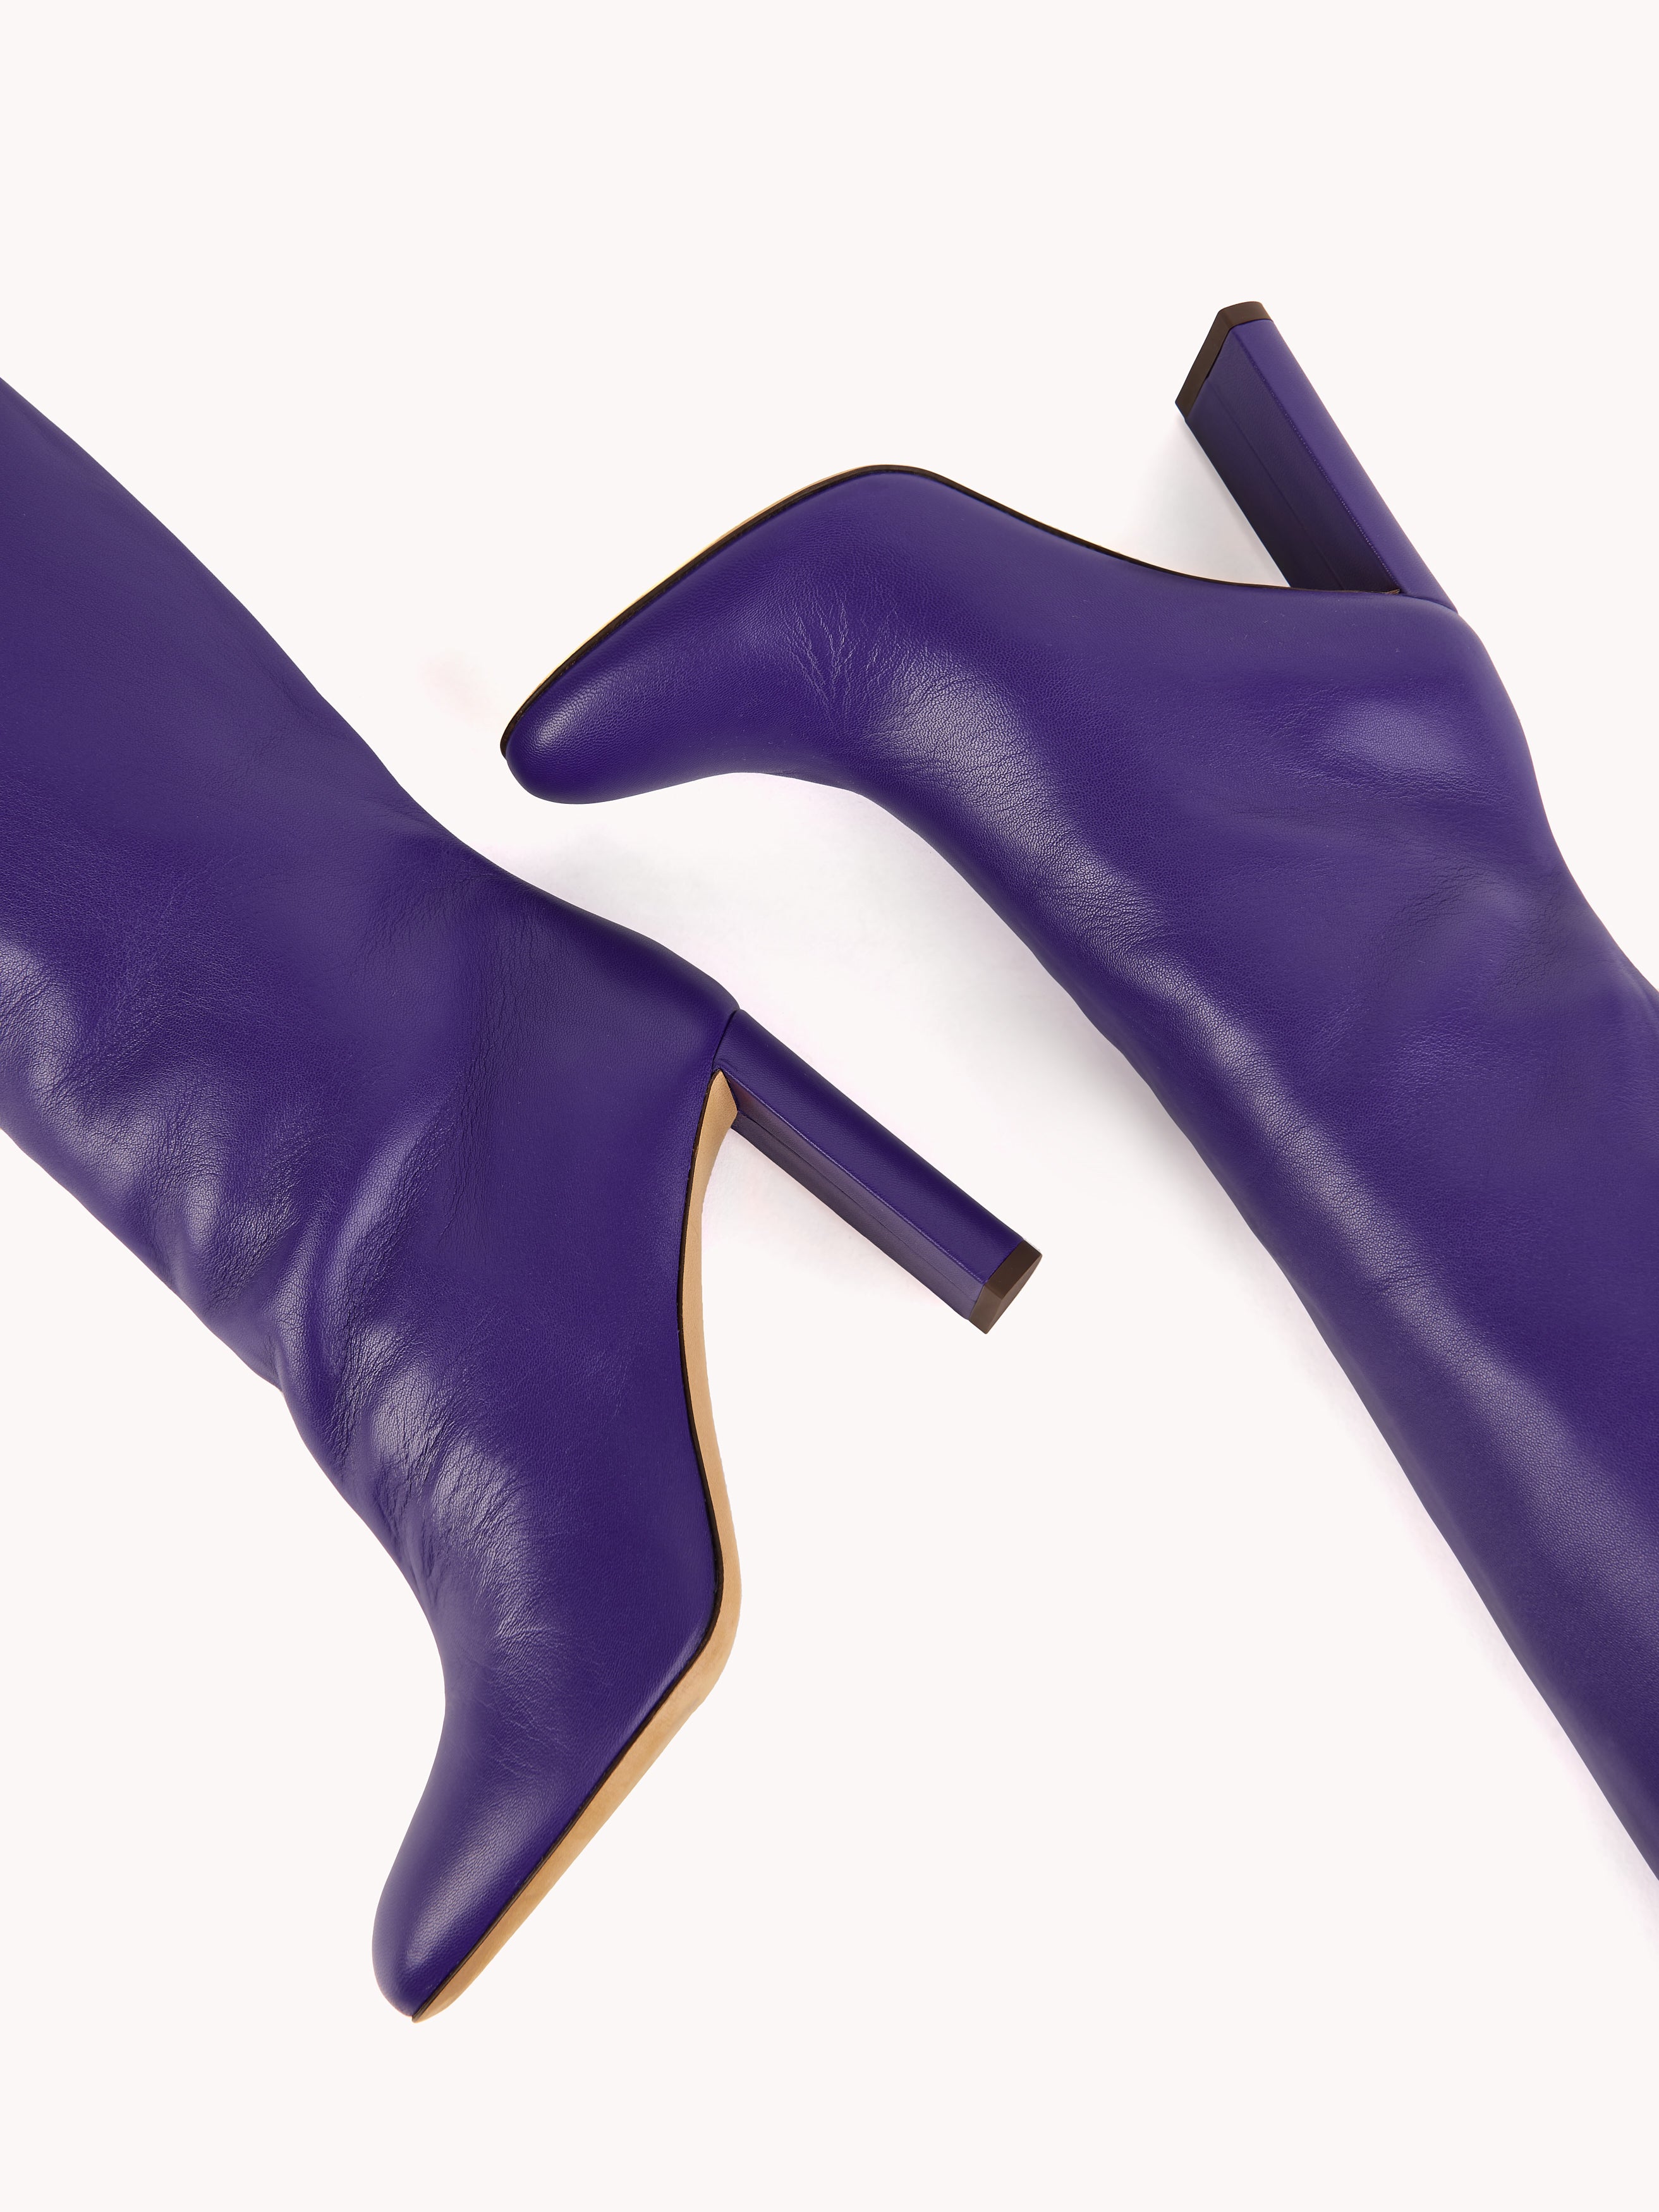 Adriana High-heel Nappa Deep Purple Leather Boots